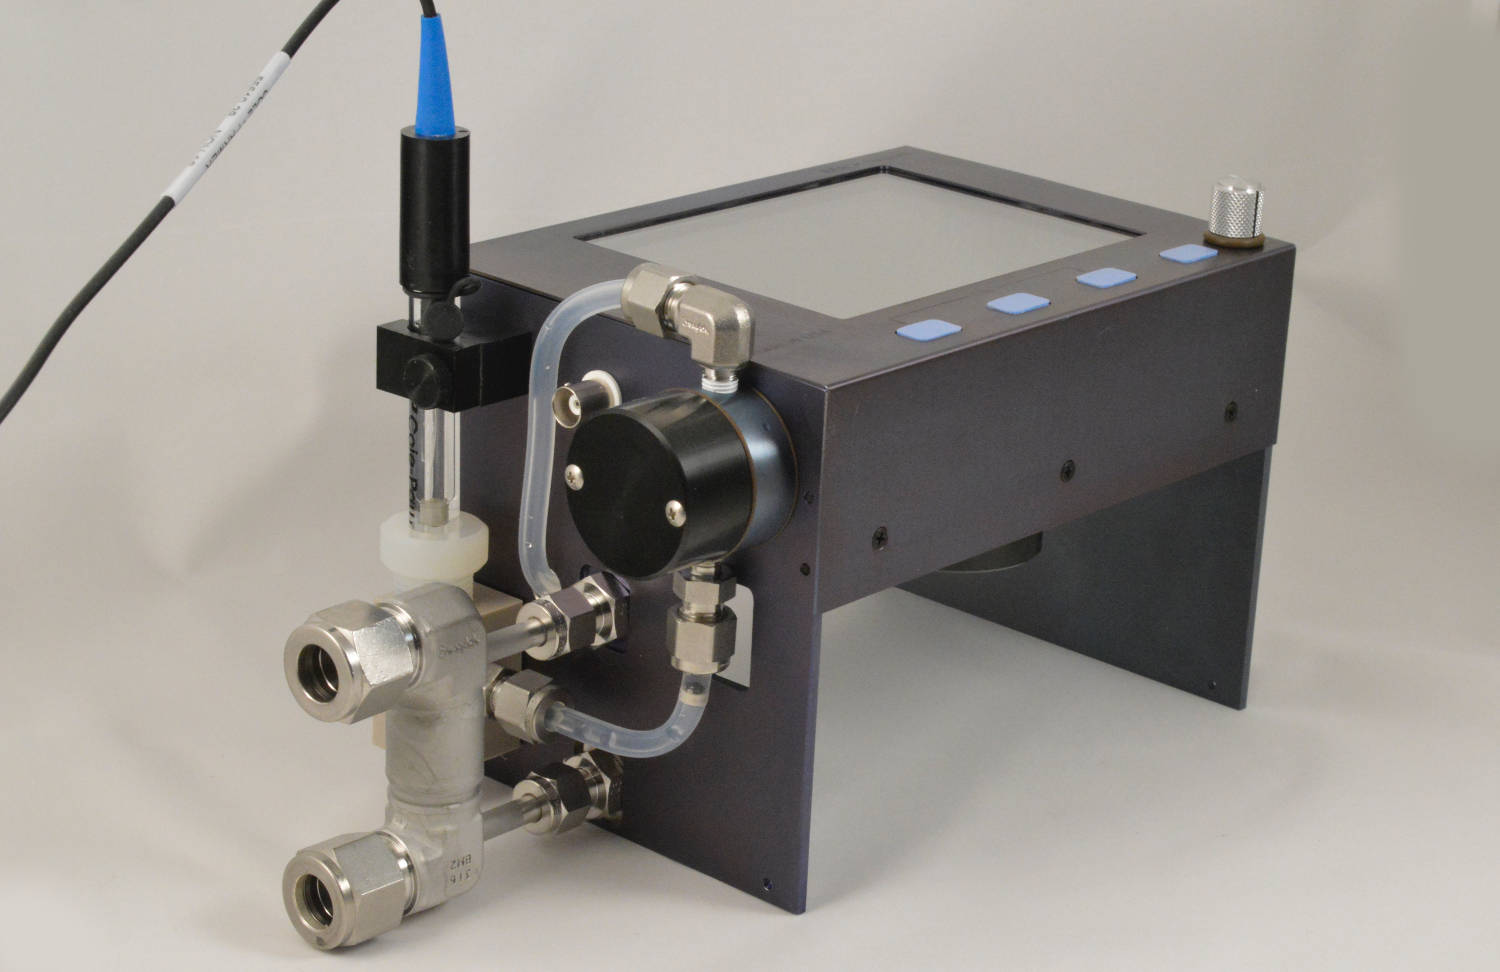 Side view of RD5I:250-280-RI-C-pH industrial liquid chromatography detector